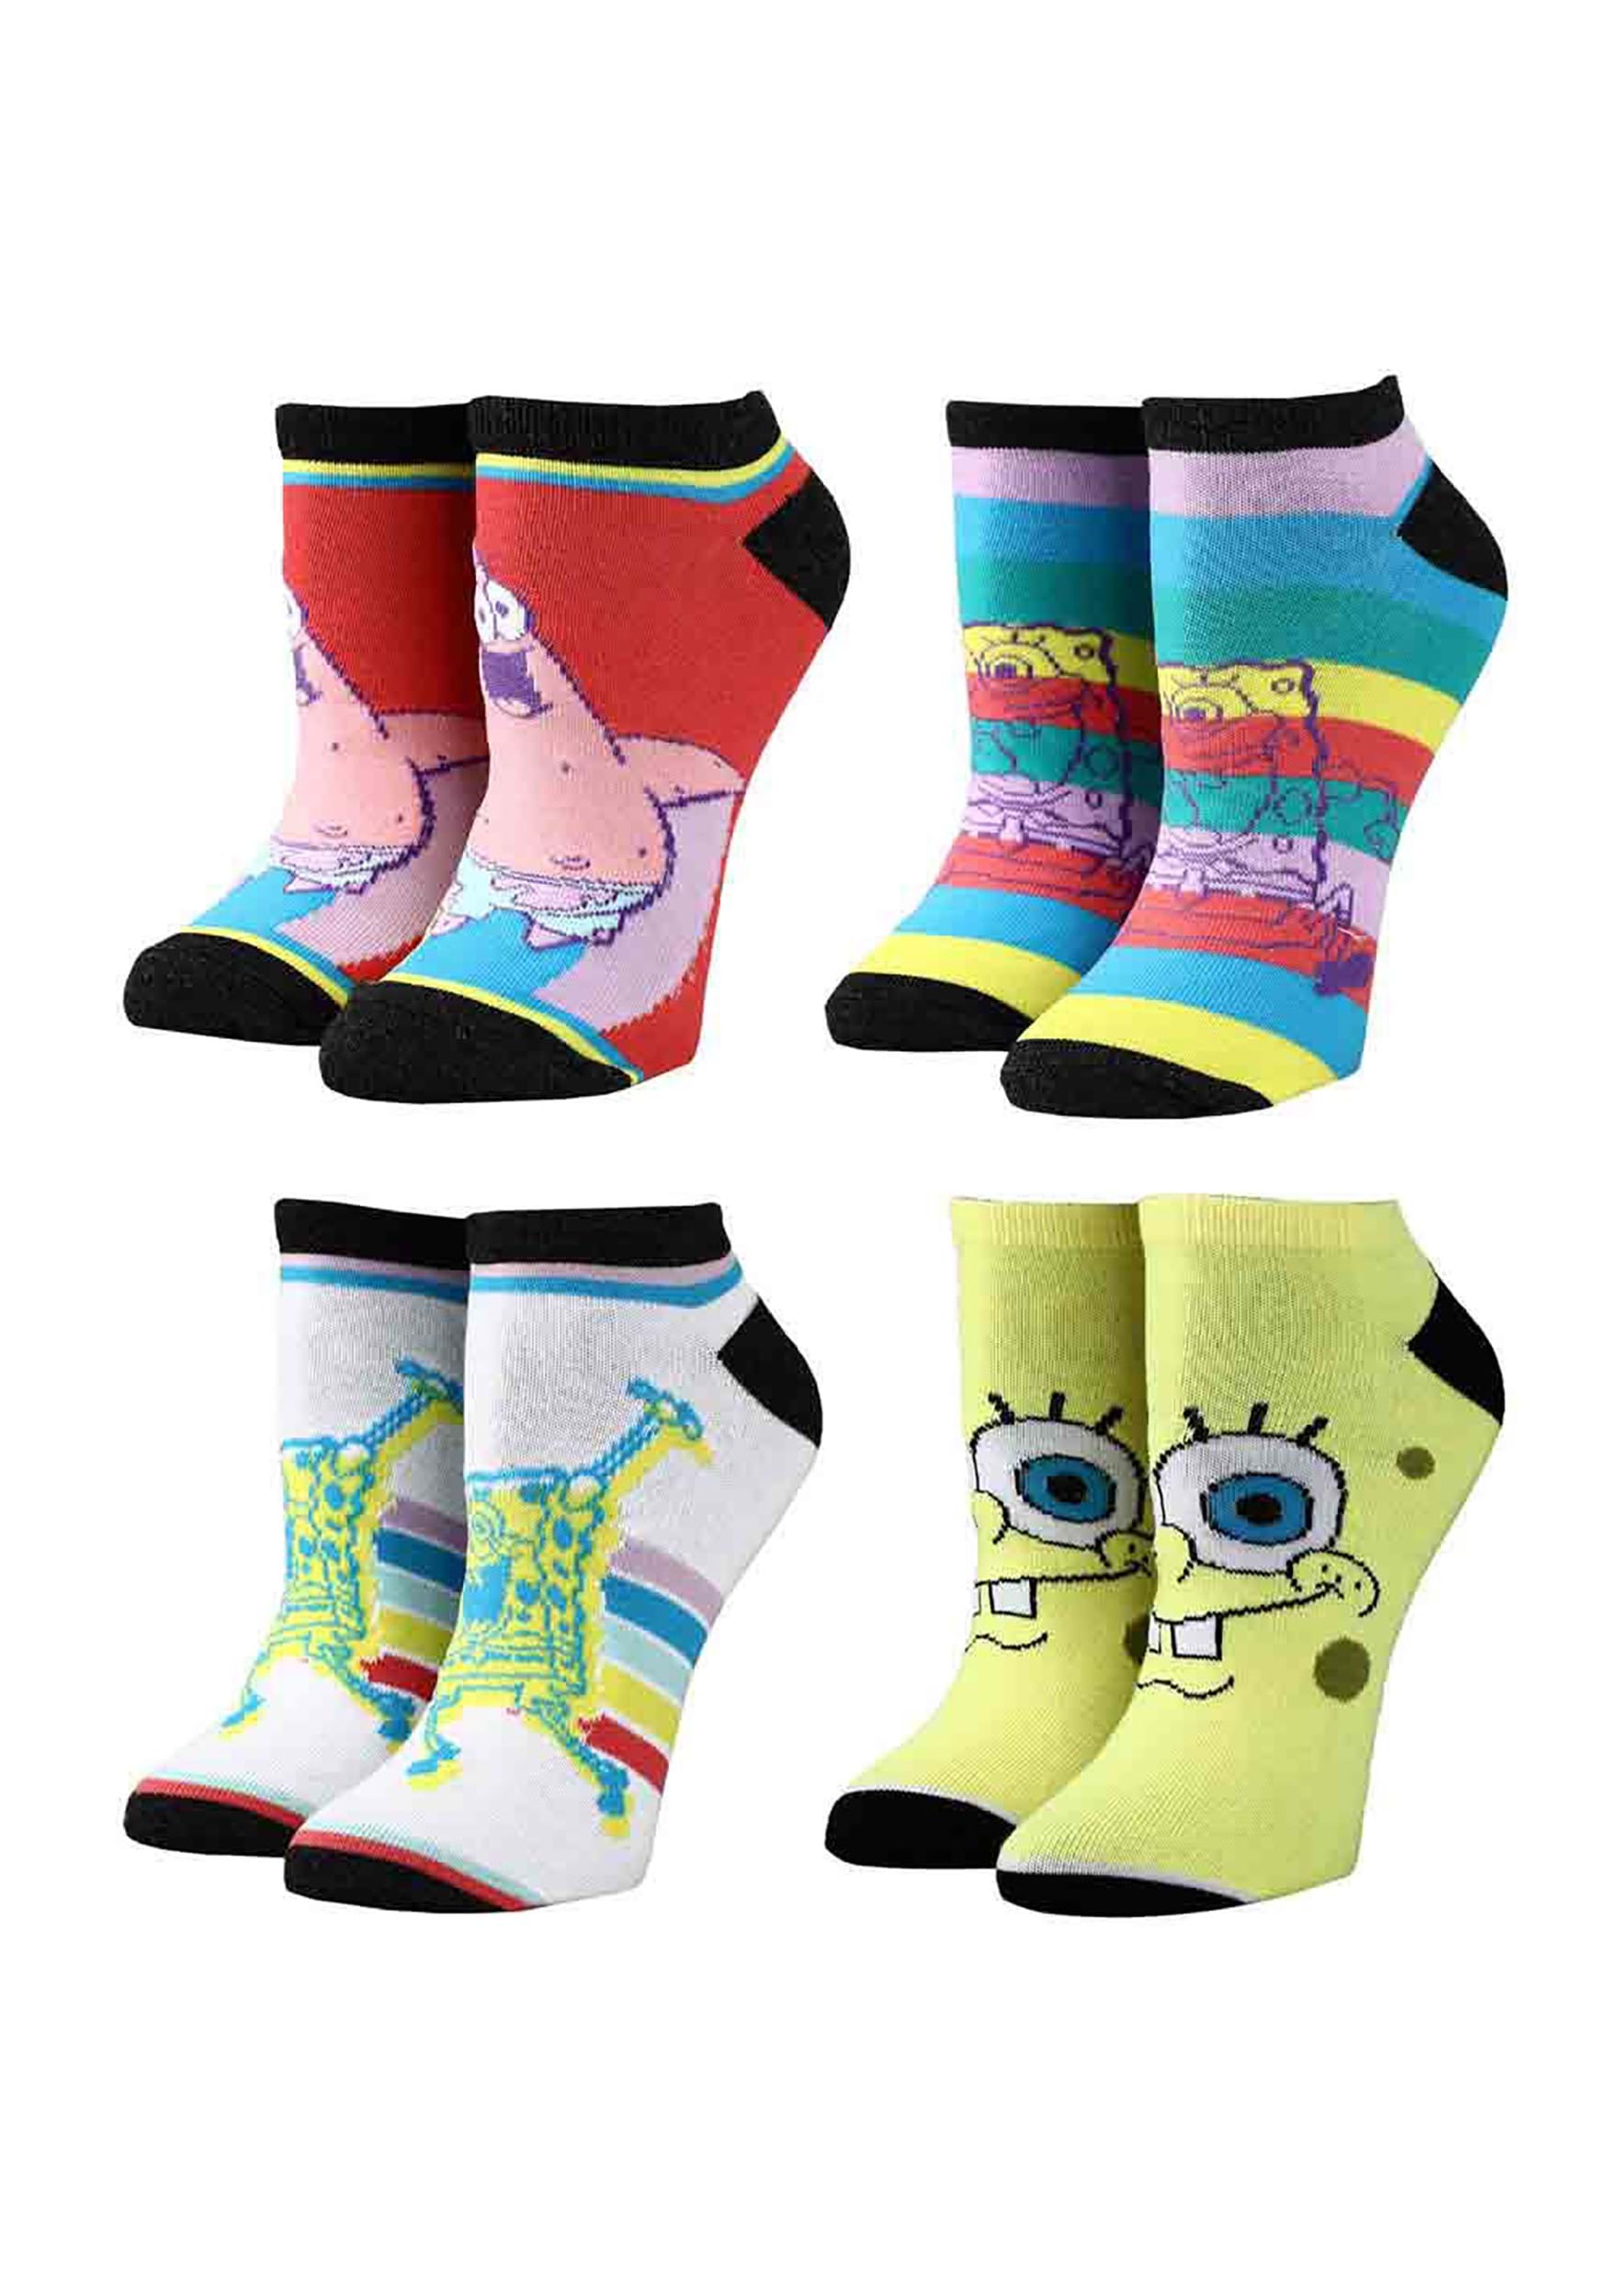 https://images.fun.com/products/79080/2-1-216163/spongebob-12-days-of-socks-box-set-alt-11.jpg